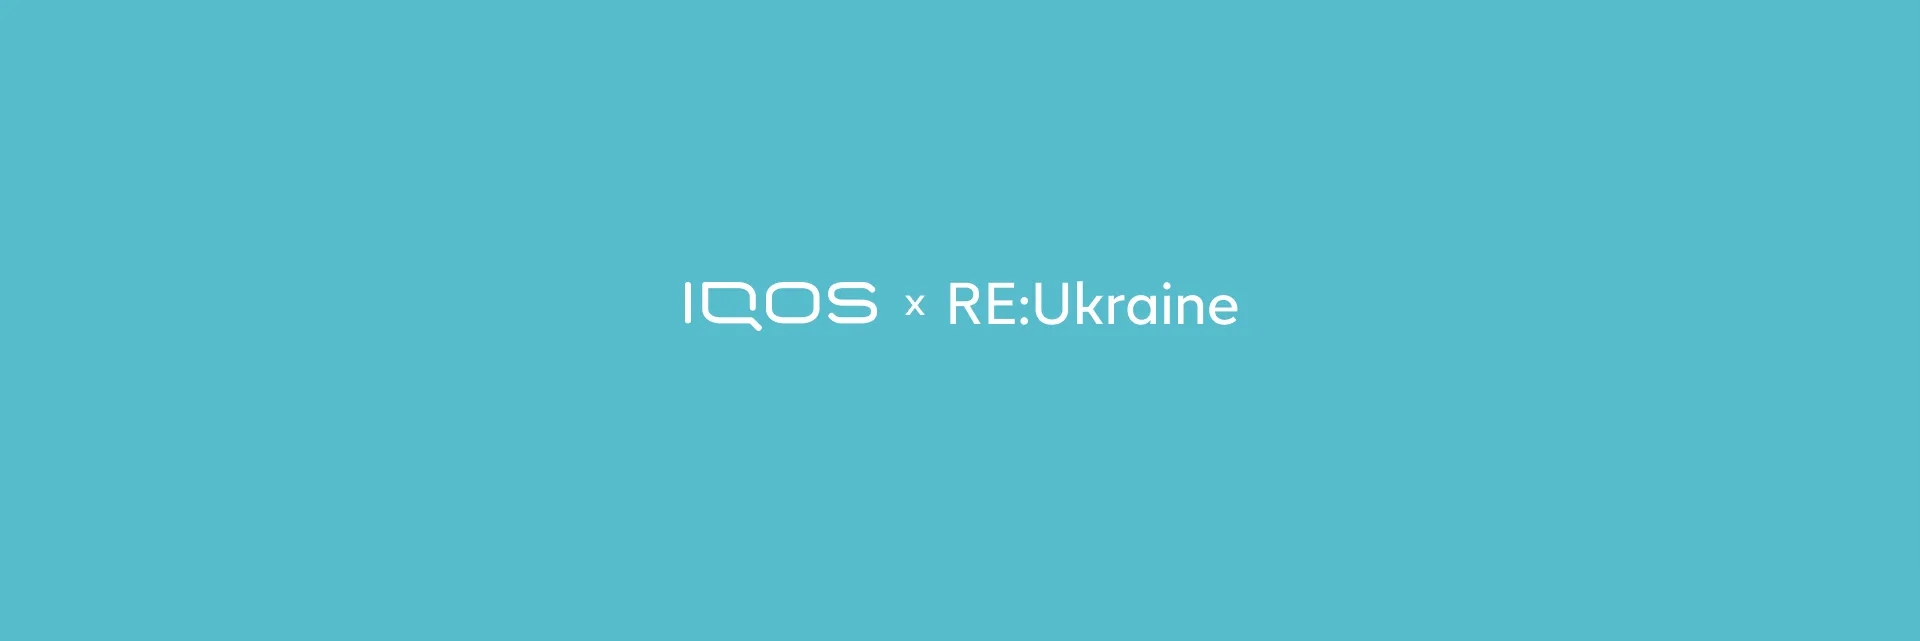 iqos-re-ukraine-housing